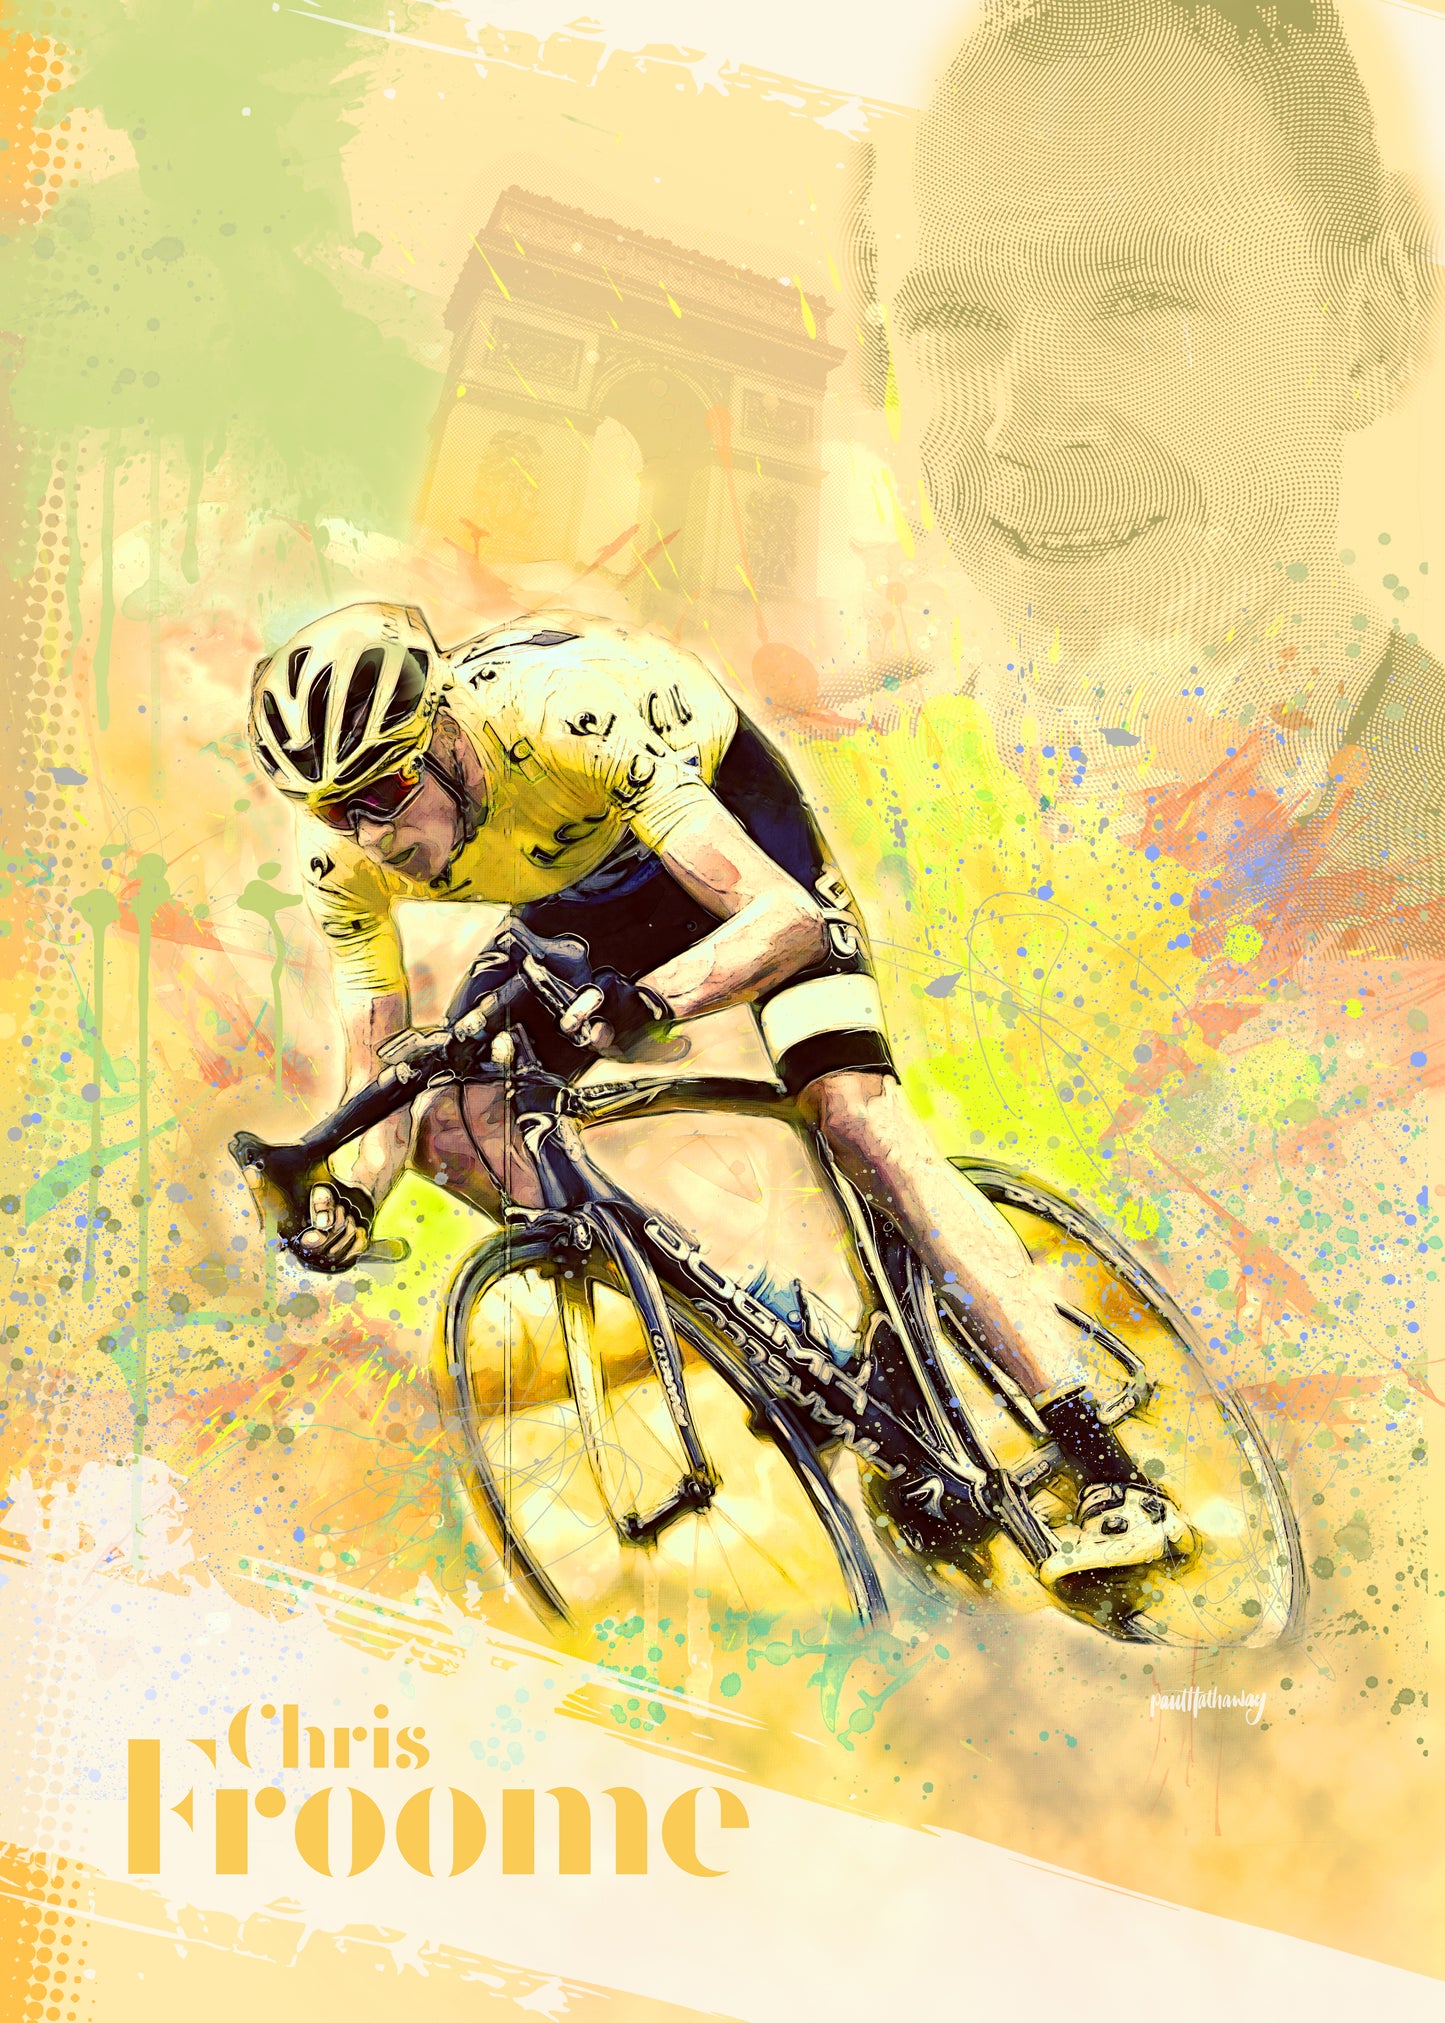 Chris Froome - Cycling Art Print - Option 1